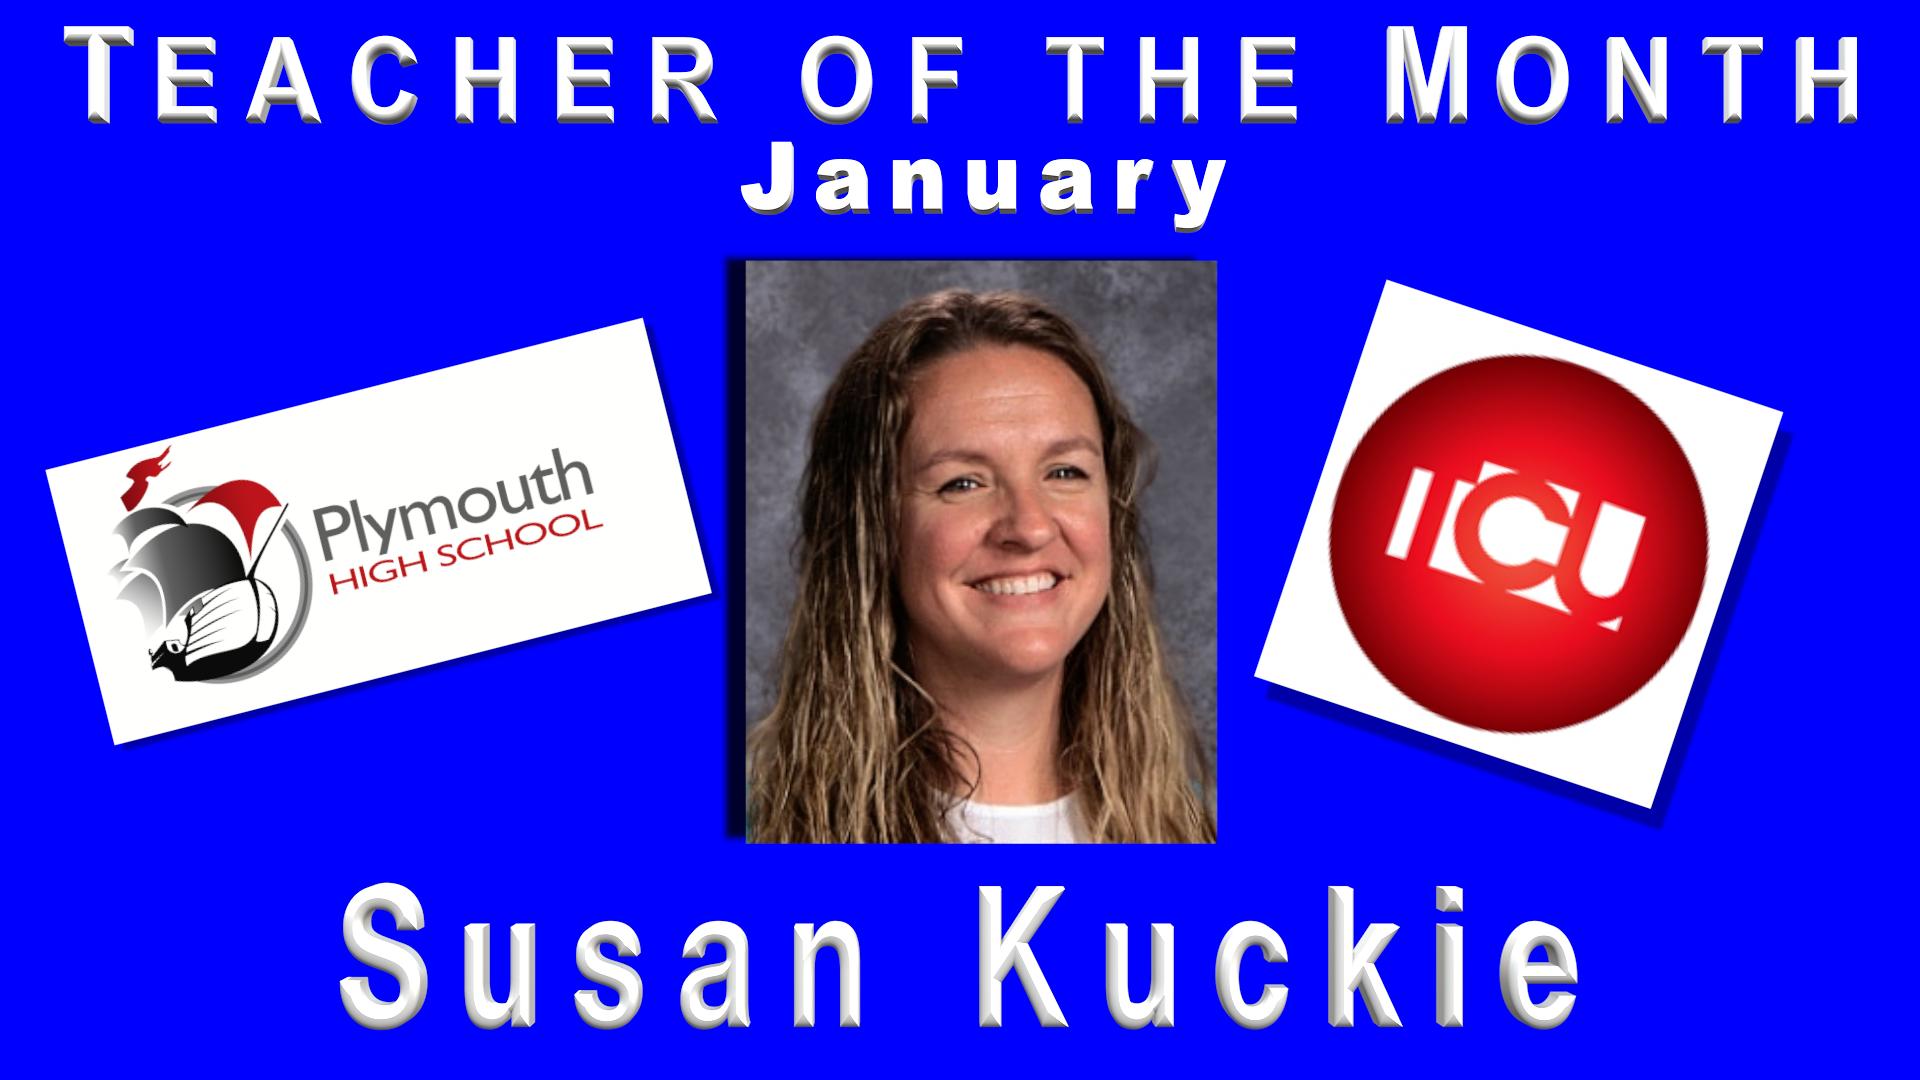 Teacher of the Month January Susan Kuckie. Plymouth High School and TCU logos